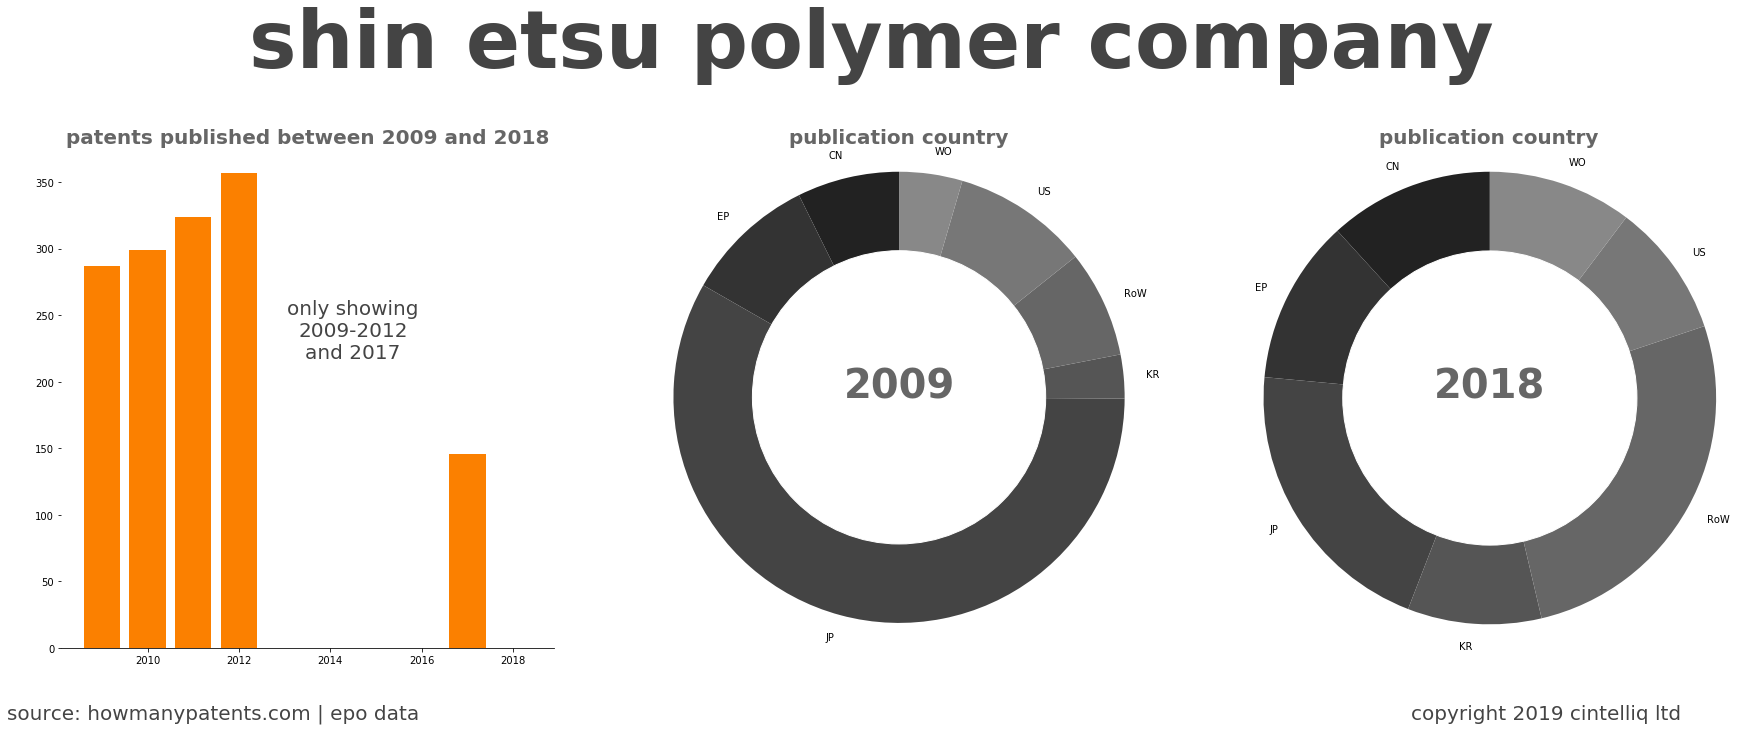 summary of patents for Shin Etsu Polymer Company